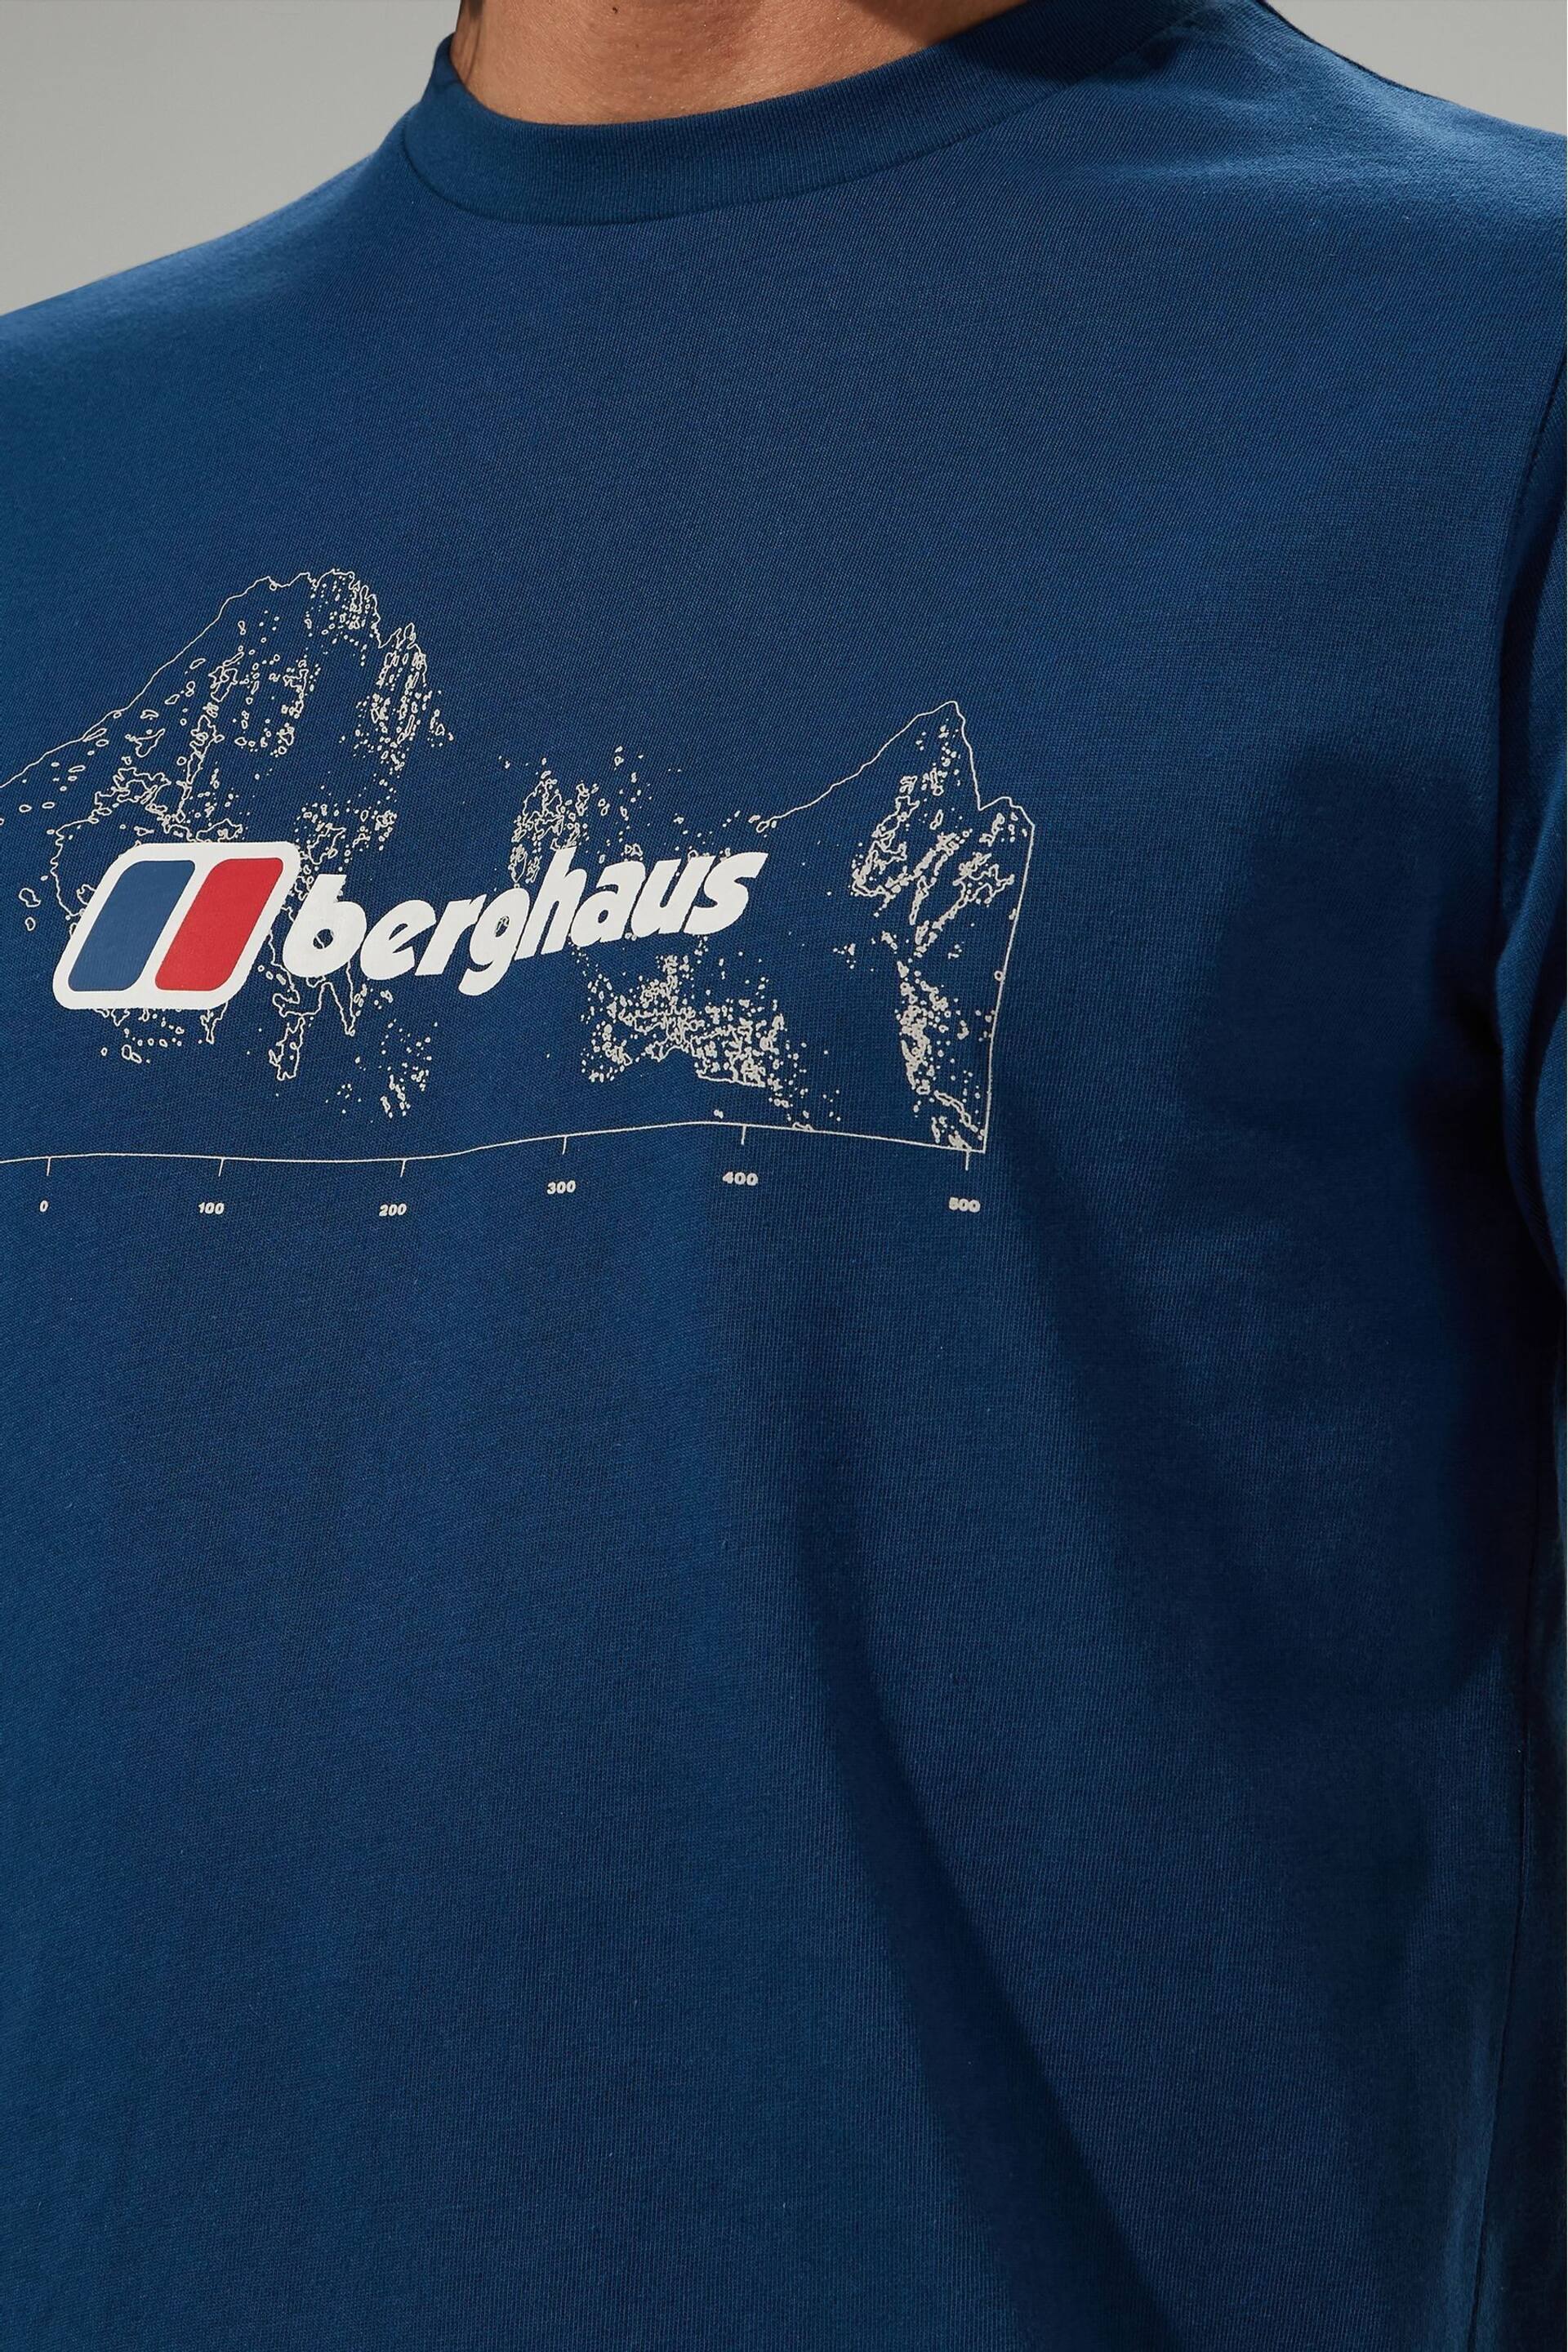 Berghaus Mountain Width Short Sleeve T-Shirt - Image 4 of 7